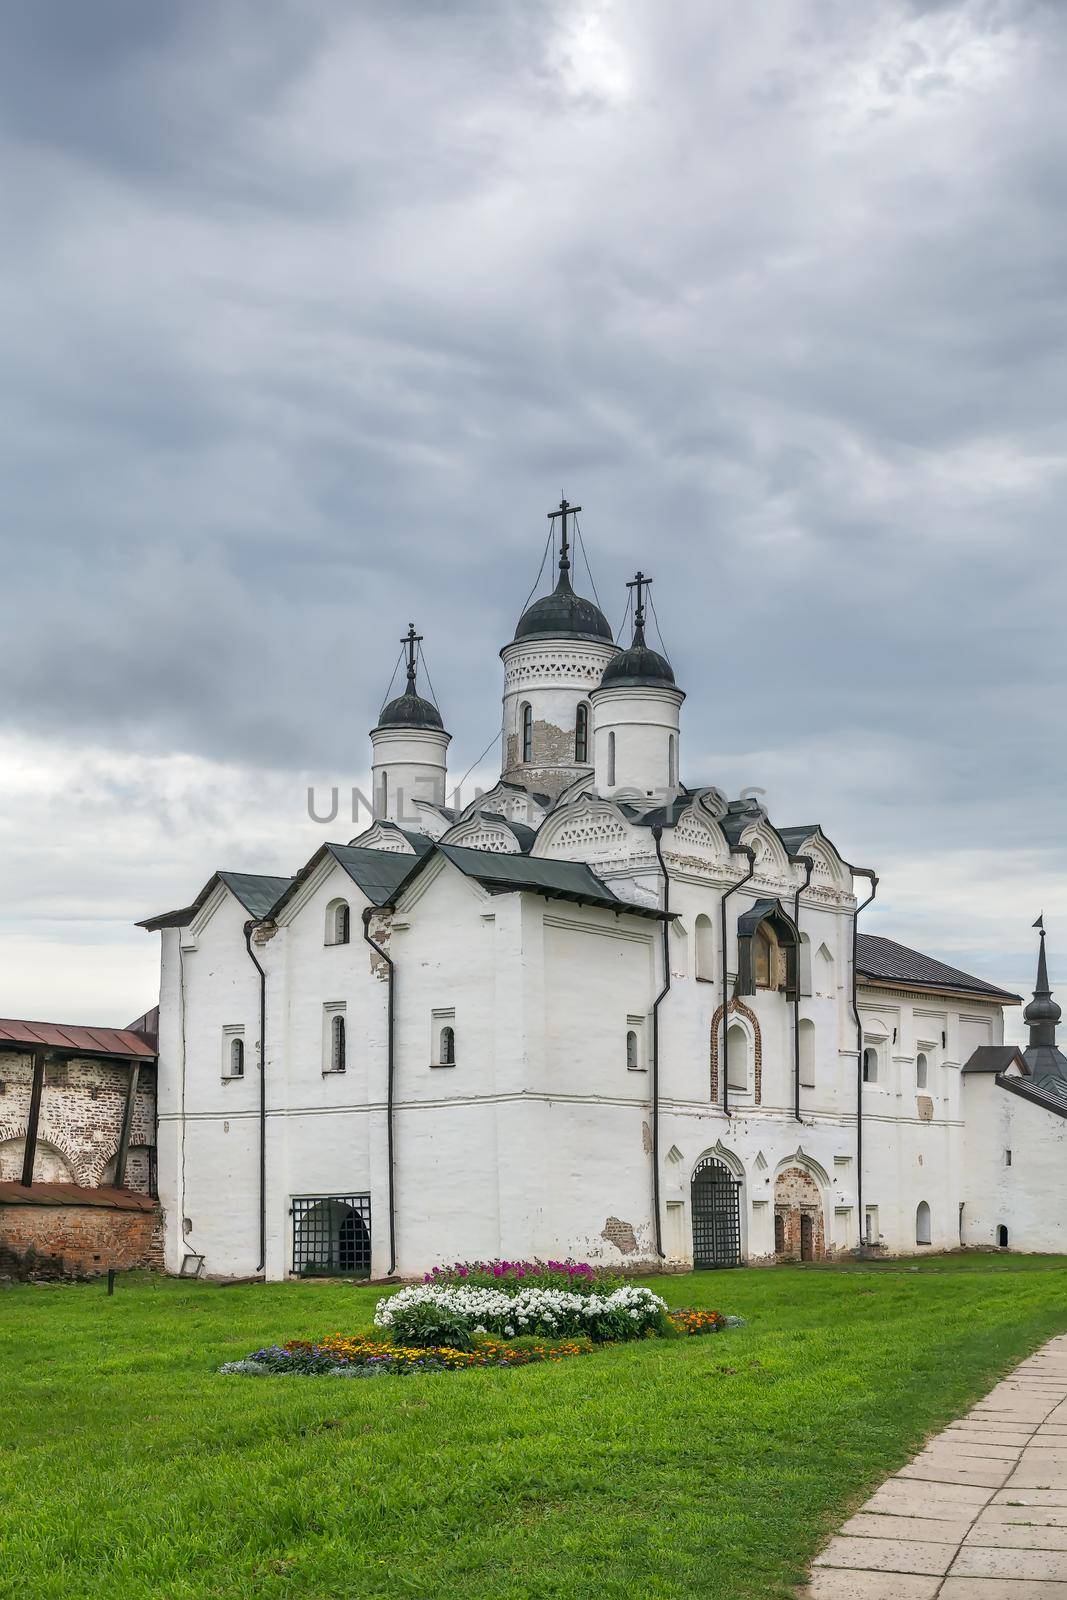 Kirillo-Belozersky Monastery, Russia by borisb17